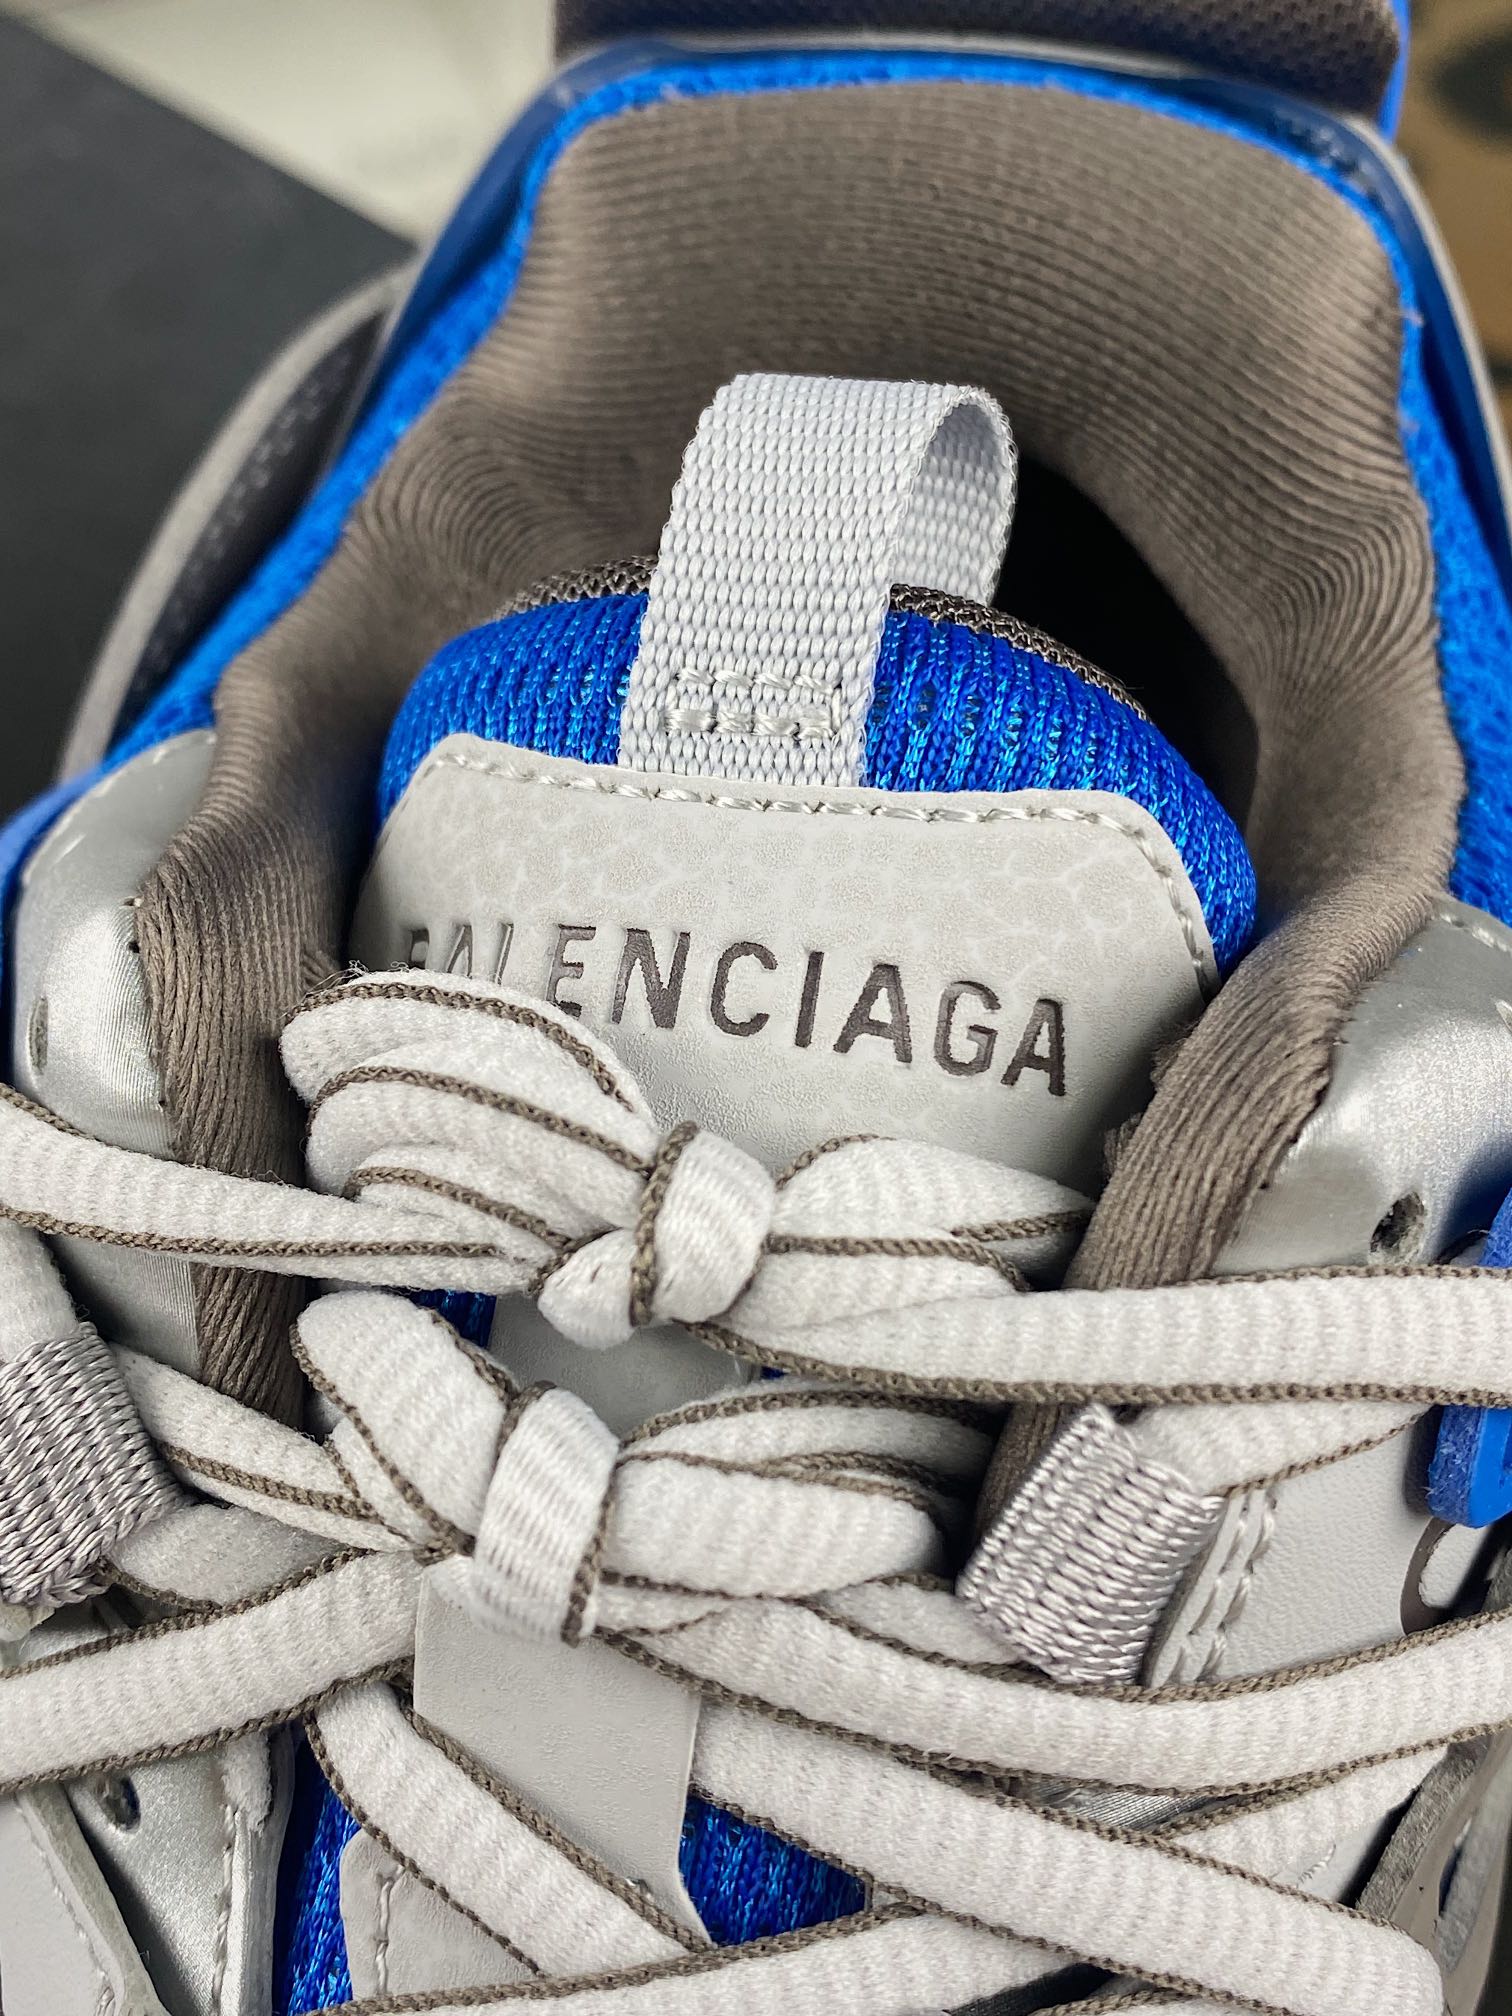 BALENCIAGA Track Traine3.0 generation series retro wild running grandpa trendy versatile casual jogging shoes 